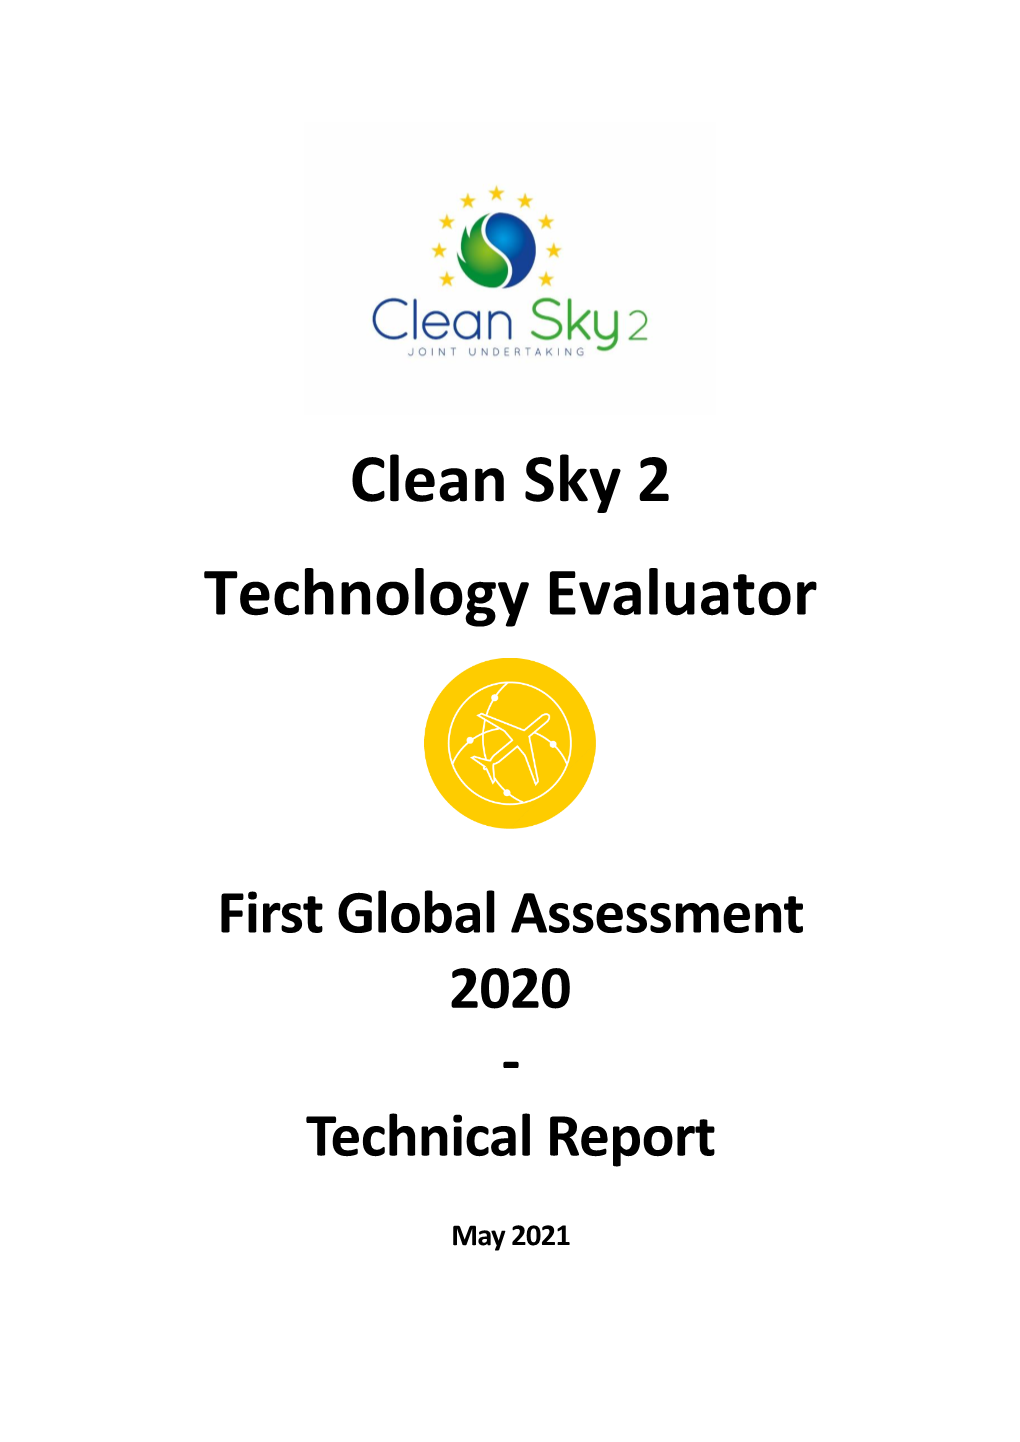 Clean Sky 2 Technology Evaluator